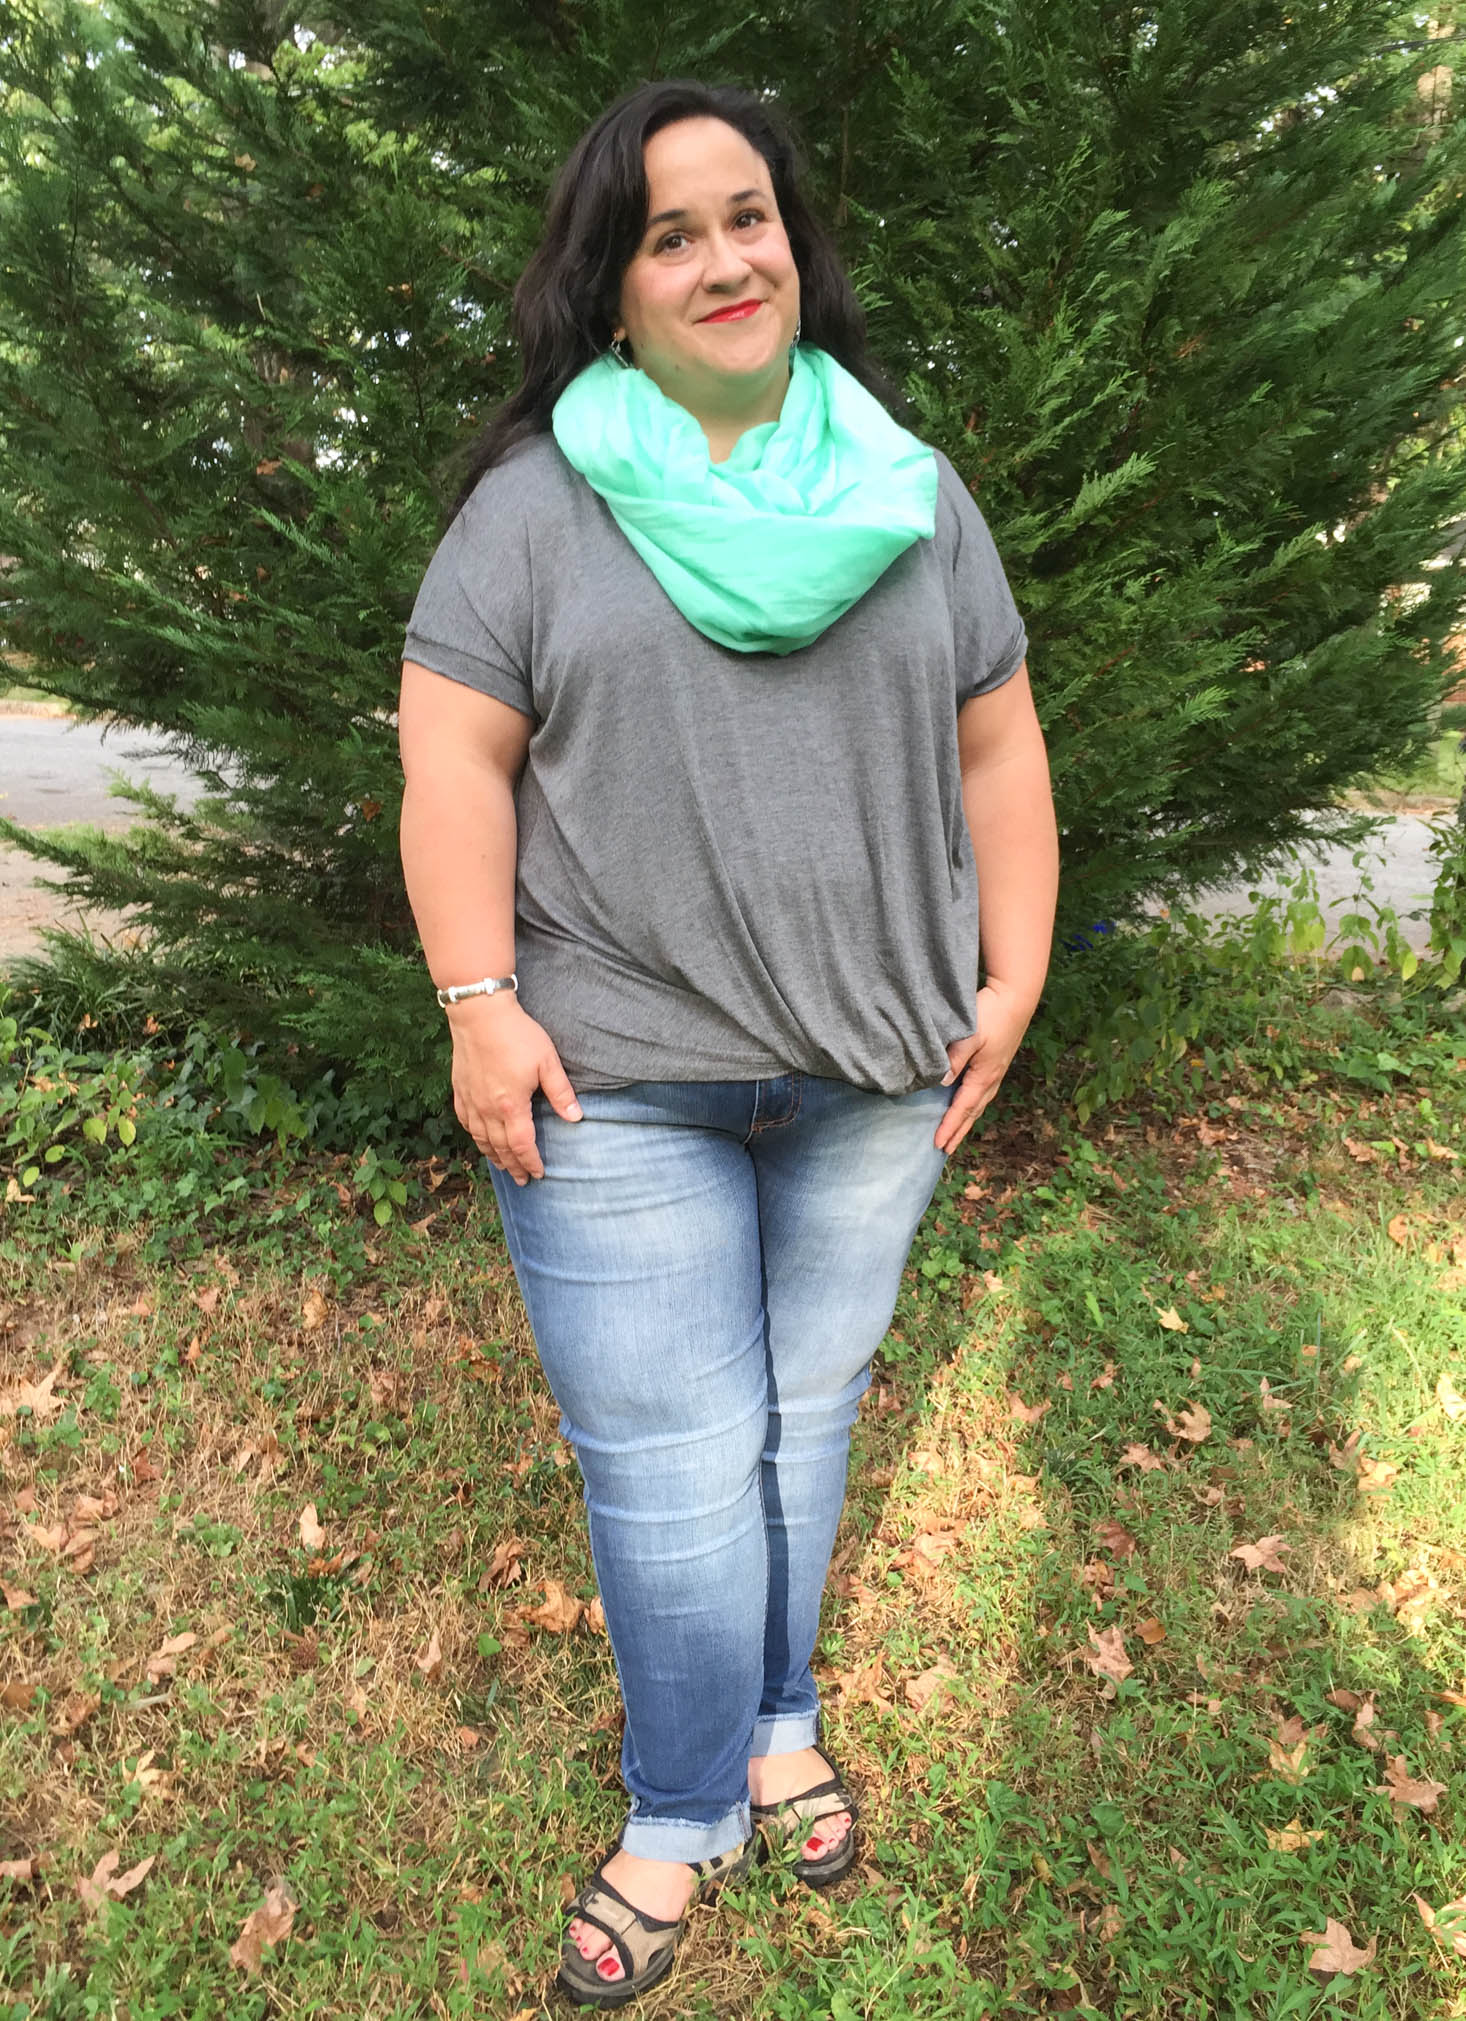 instaglam-september-2016-scarf-model